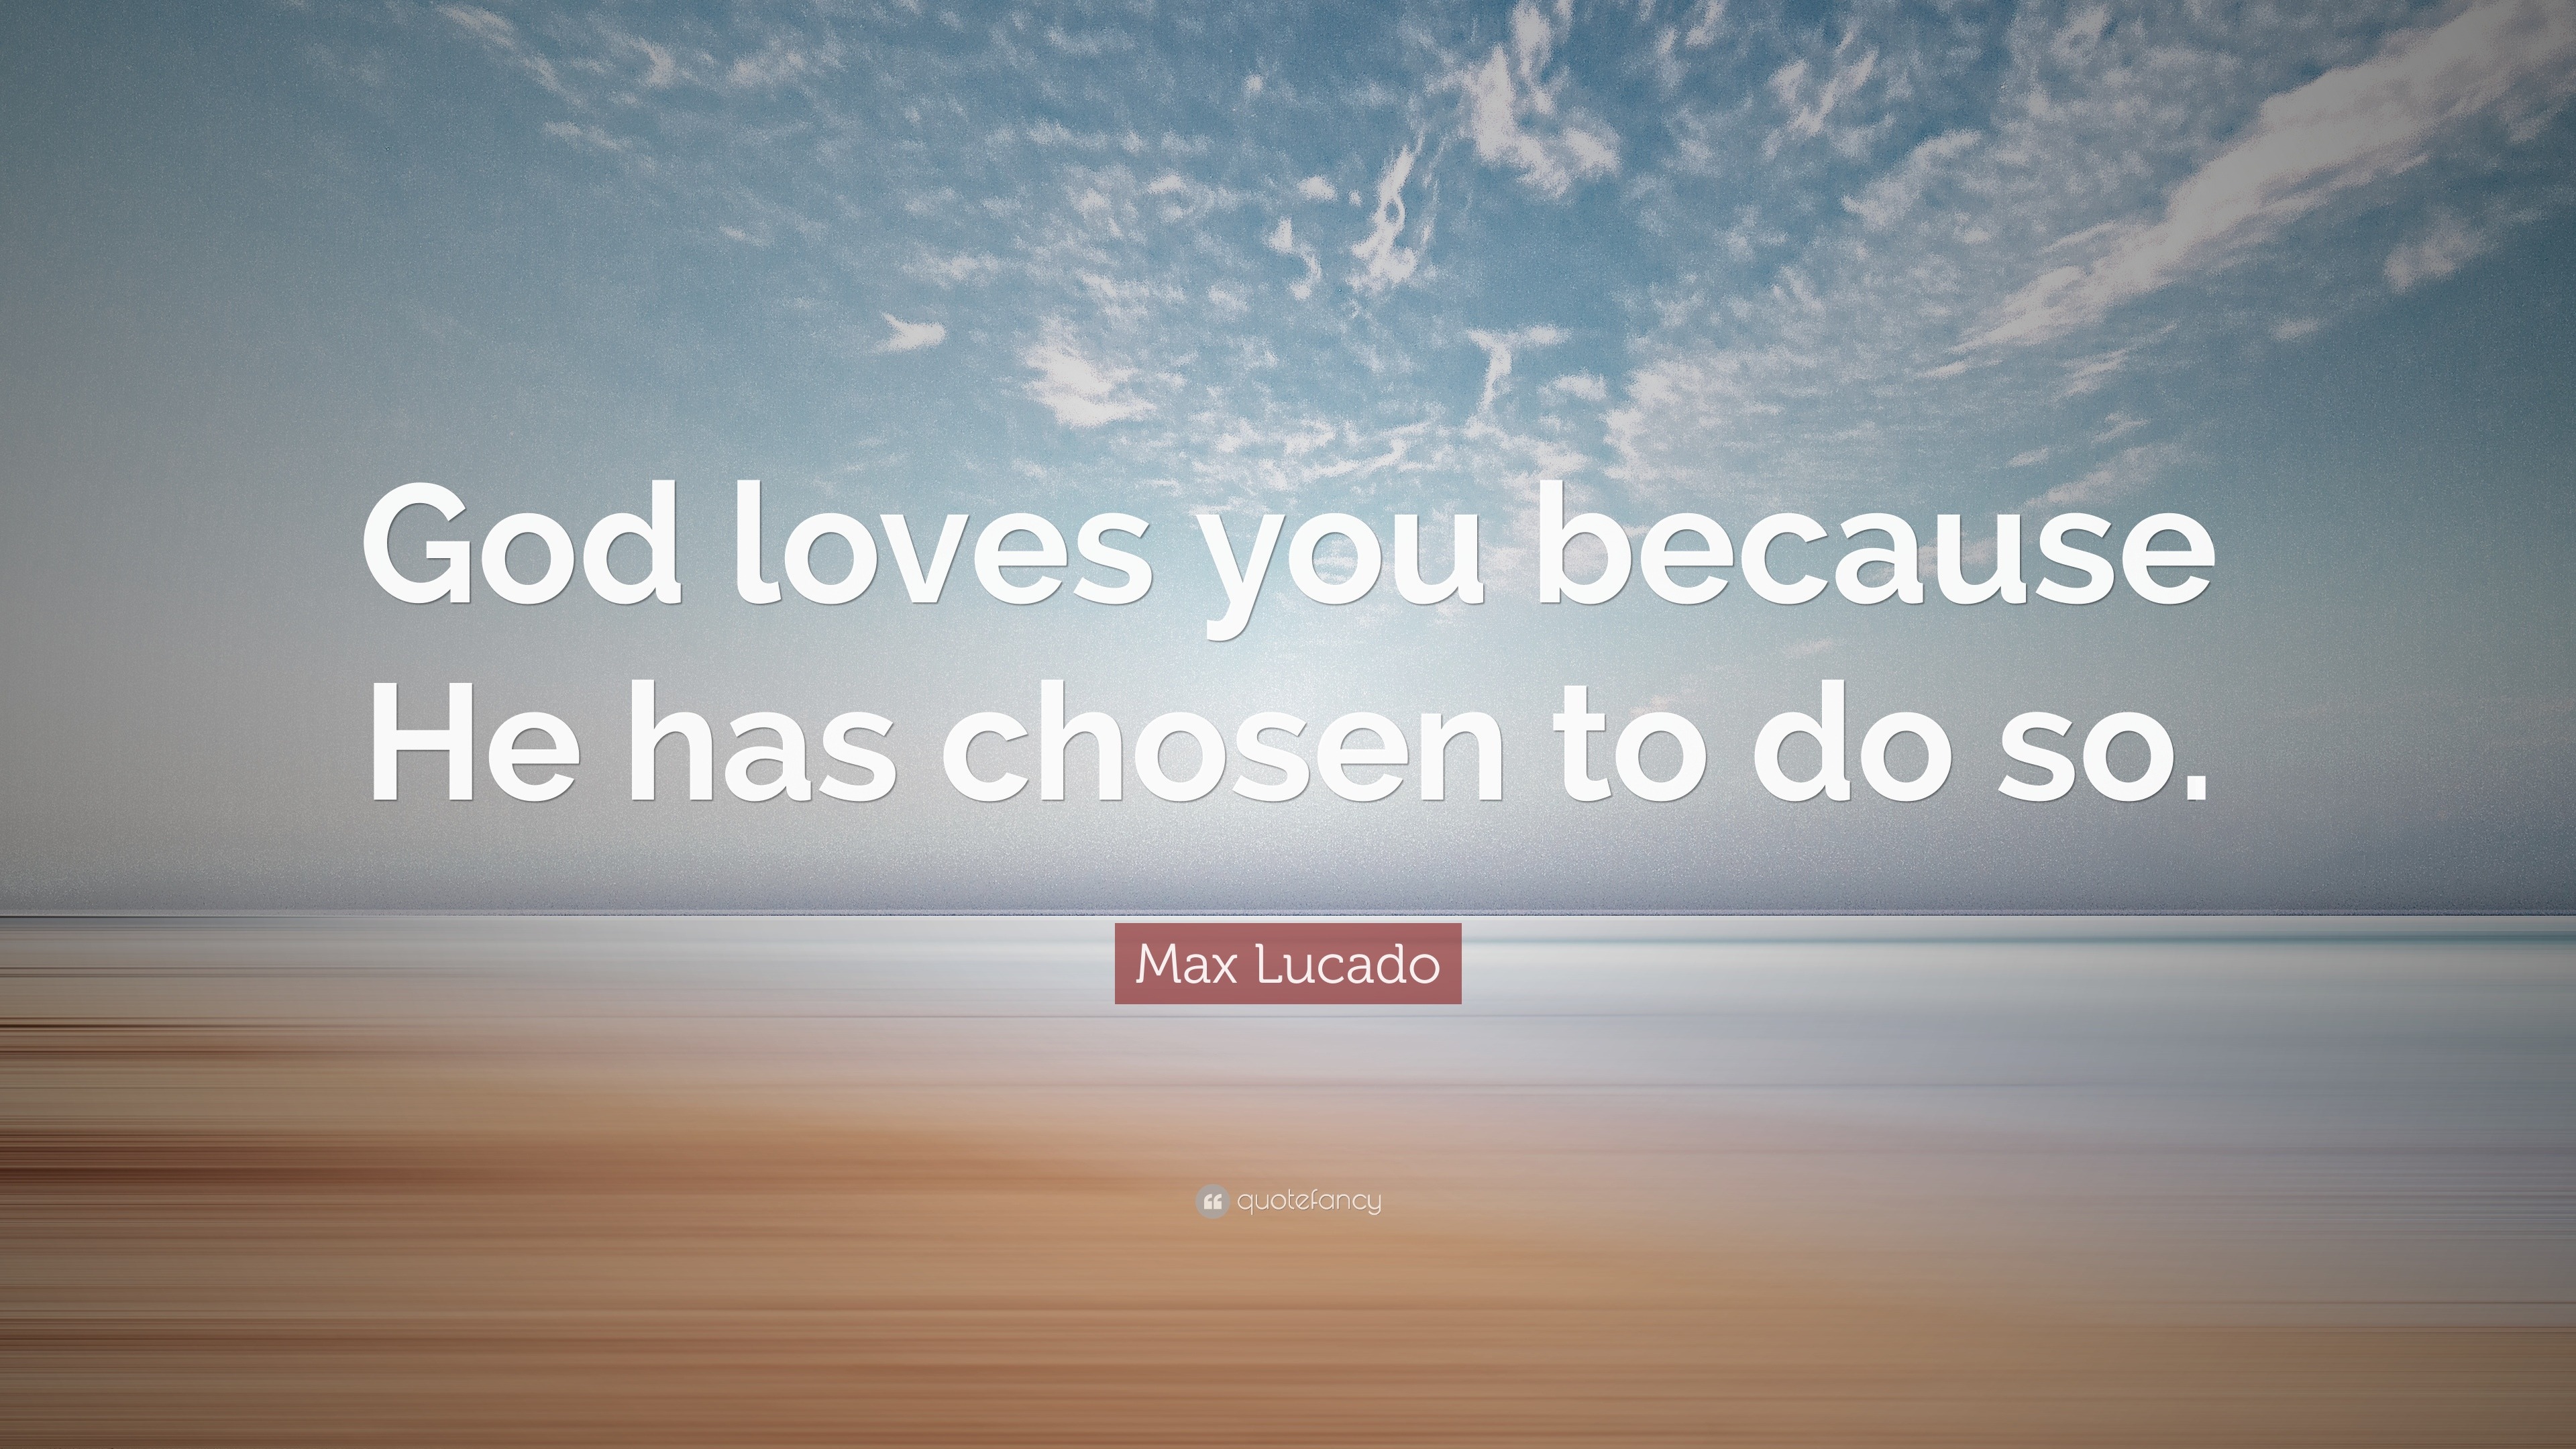 Max Lucado Quote “God loves you because He has chosen to do so